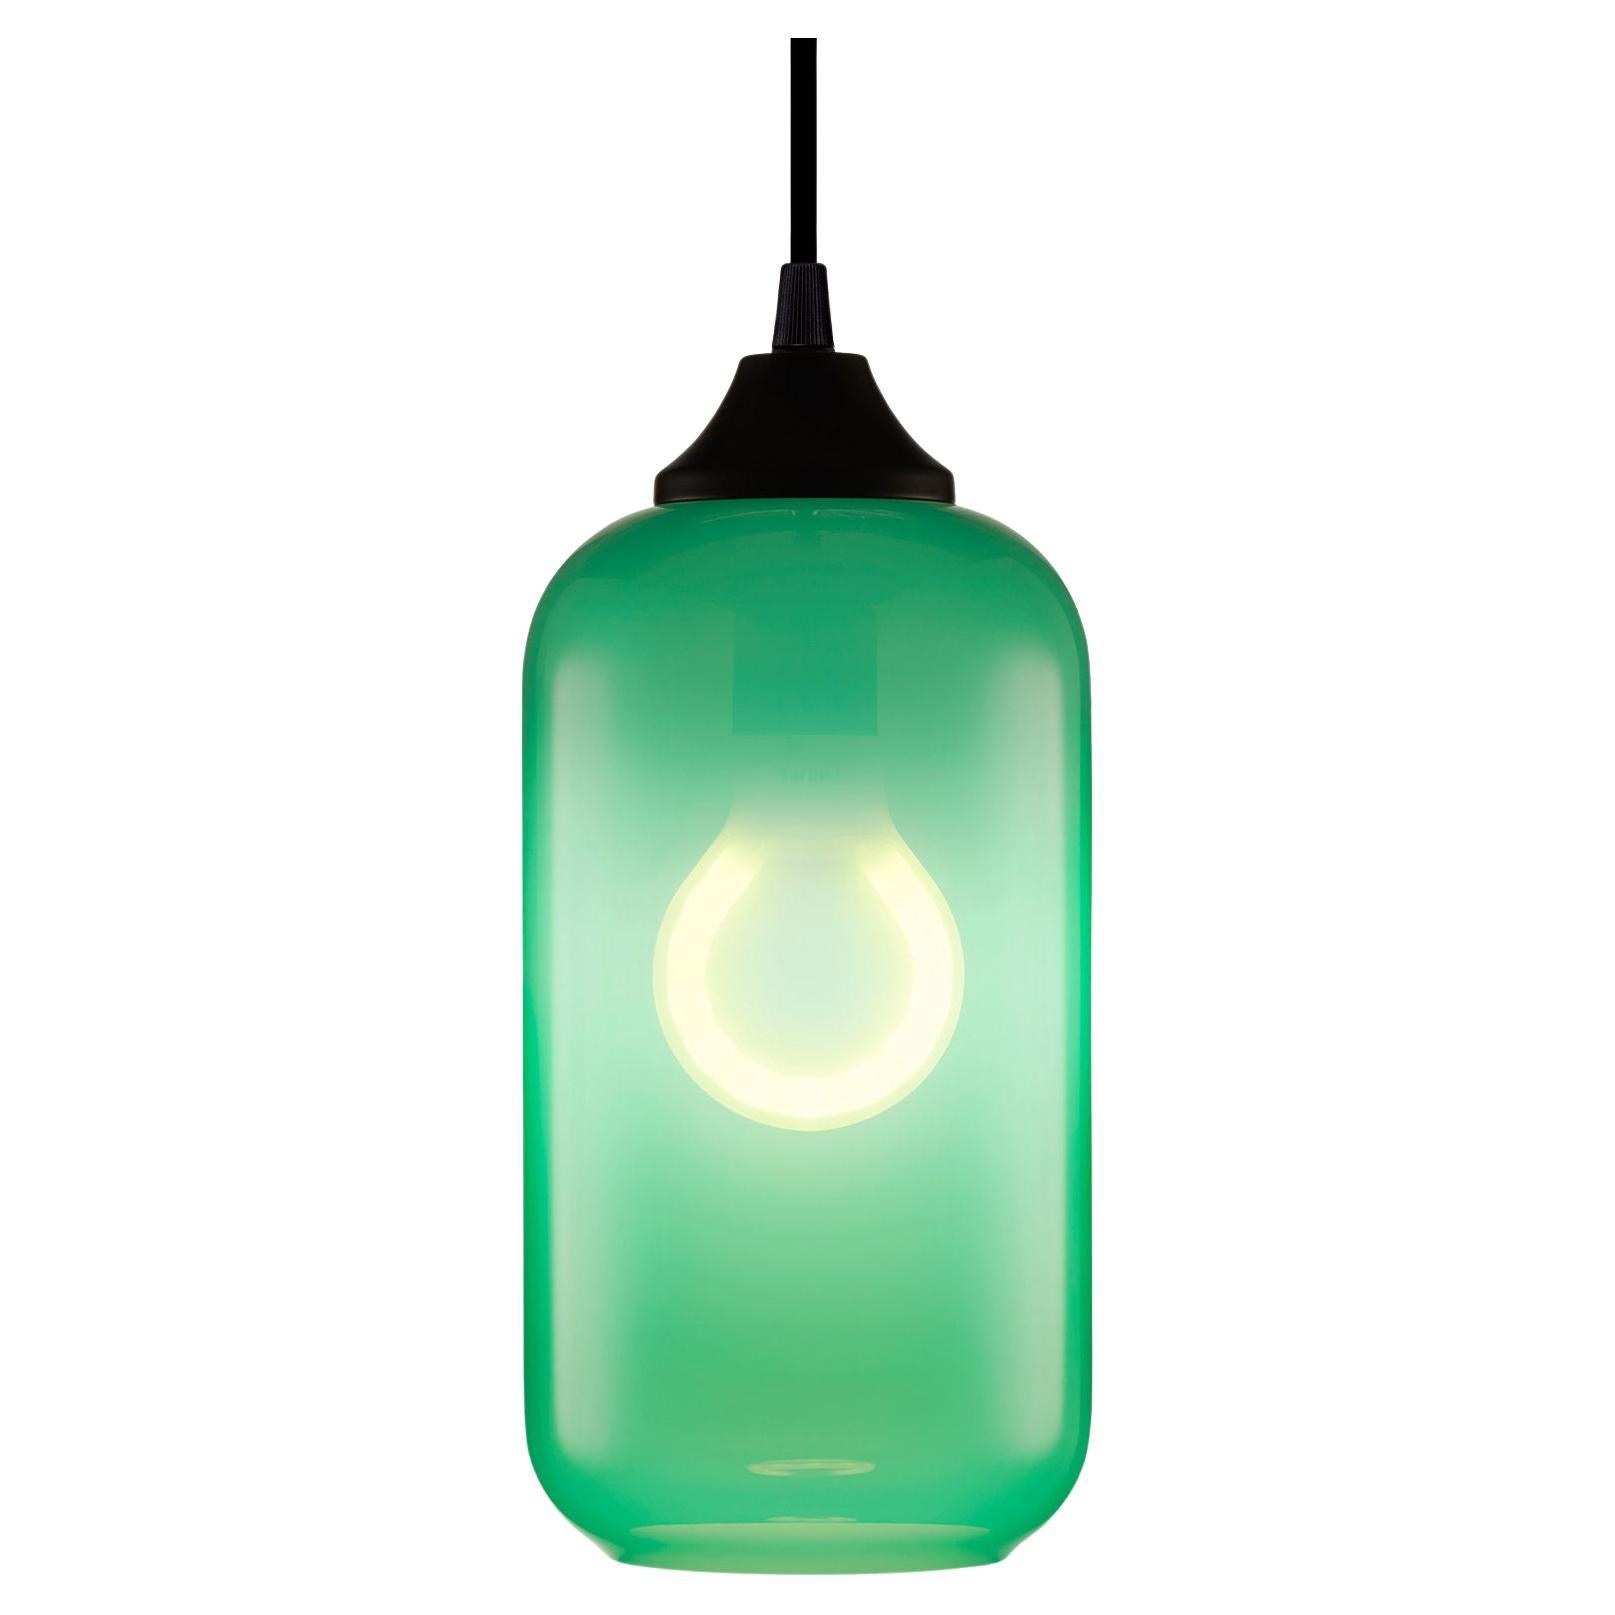 Helio Chroma Jade Handblown Modern Glass Pendant Light, Made in the USA